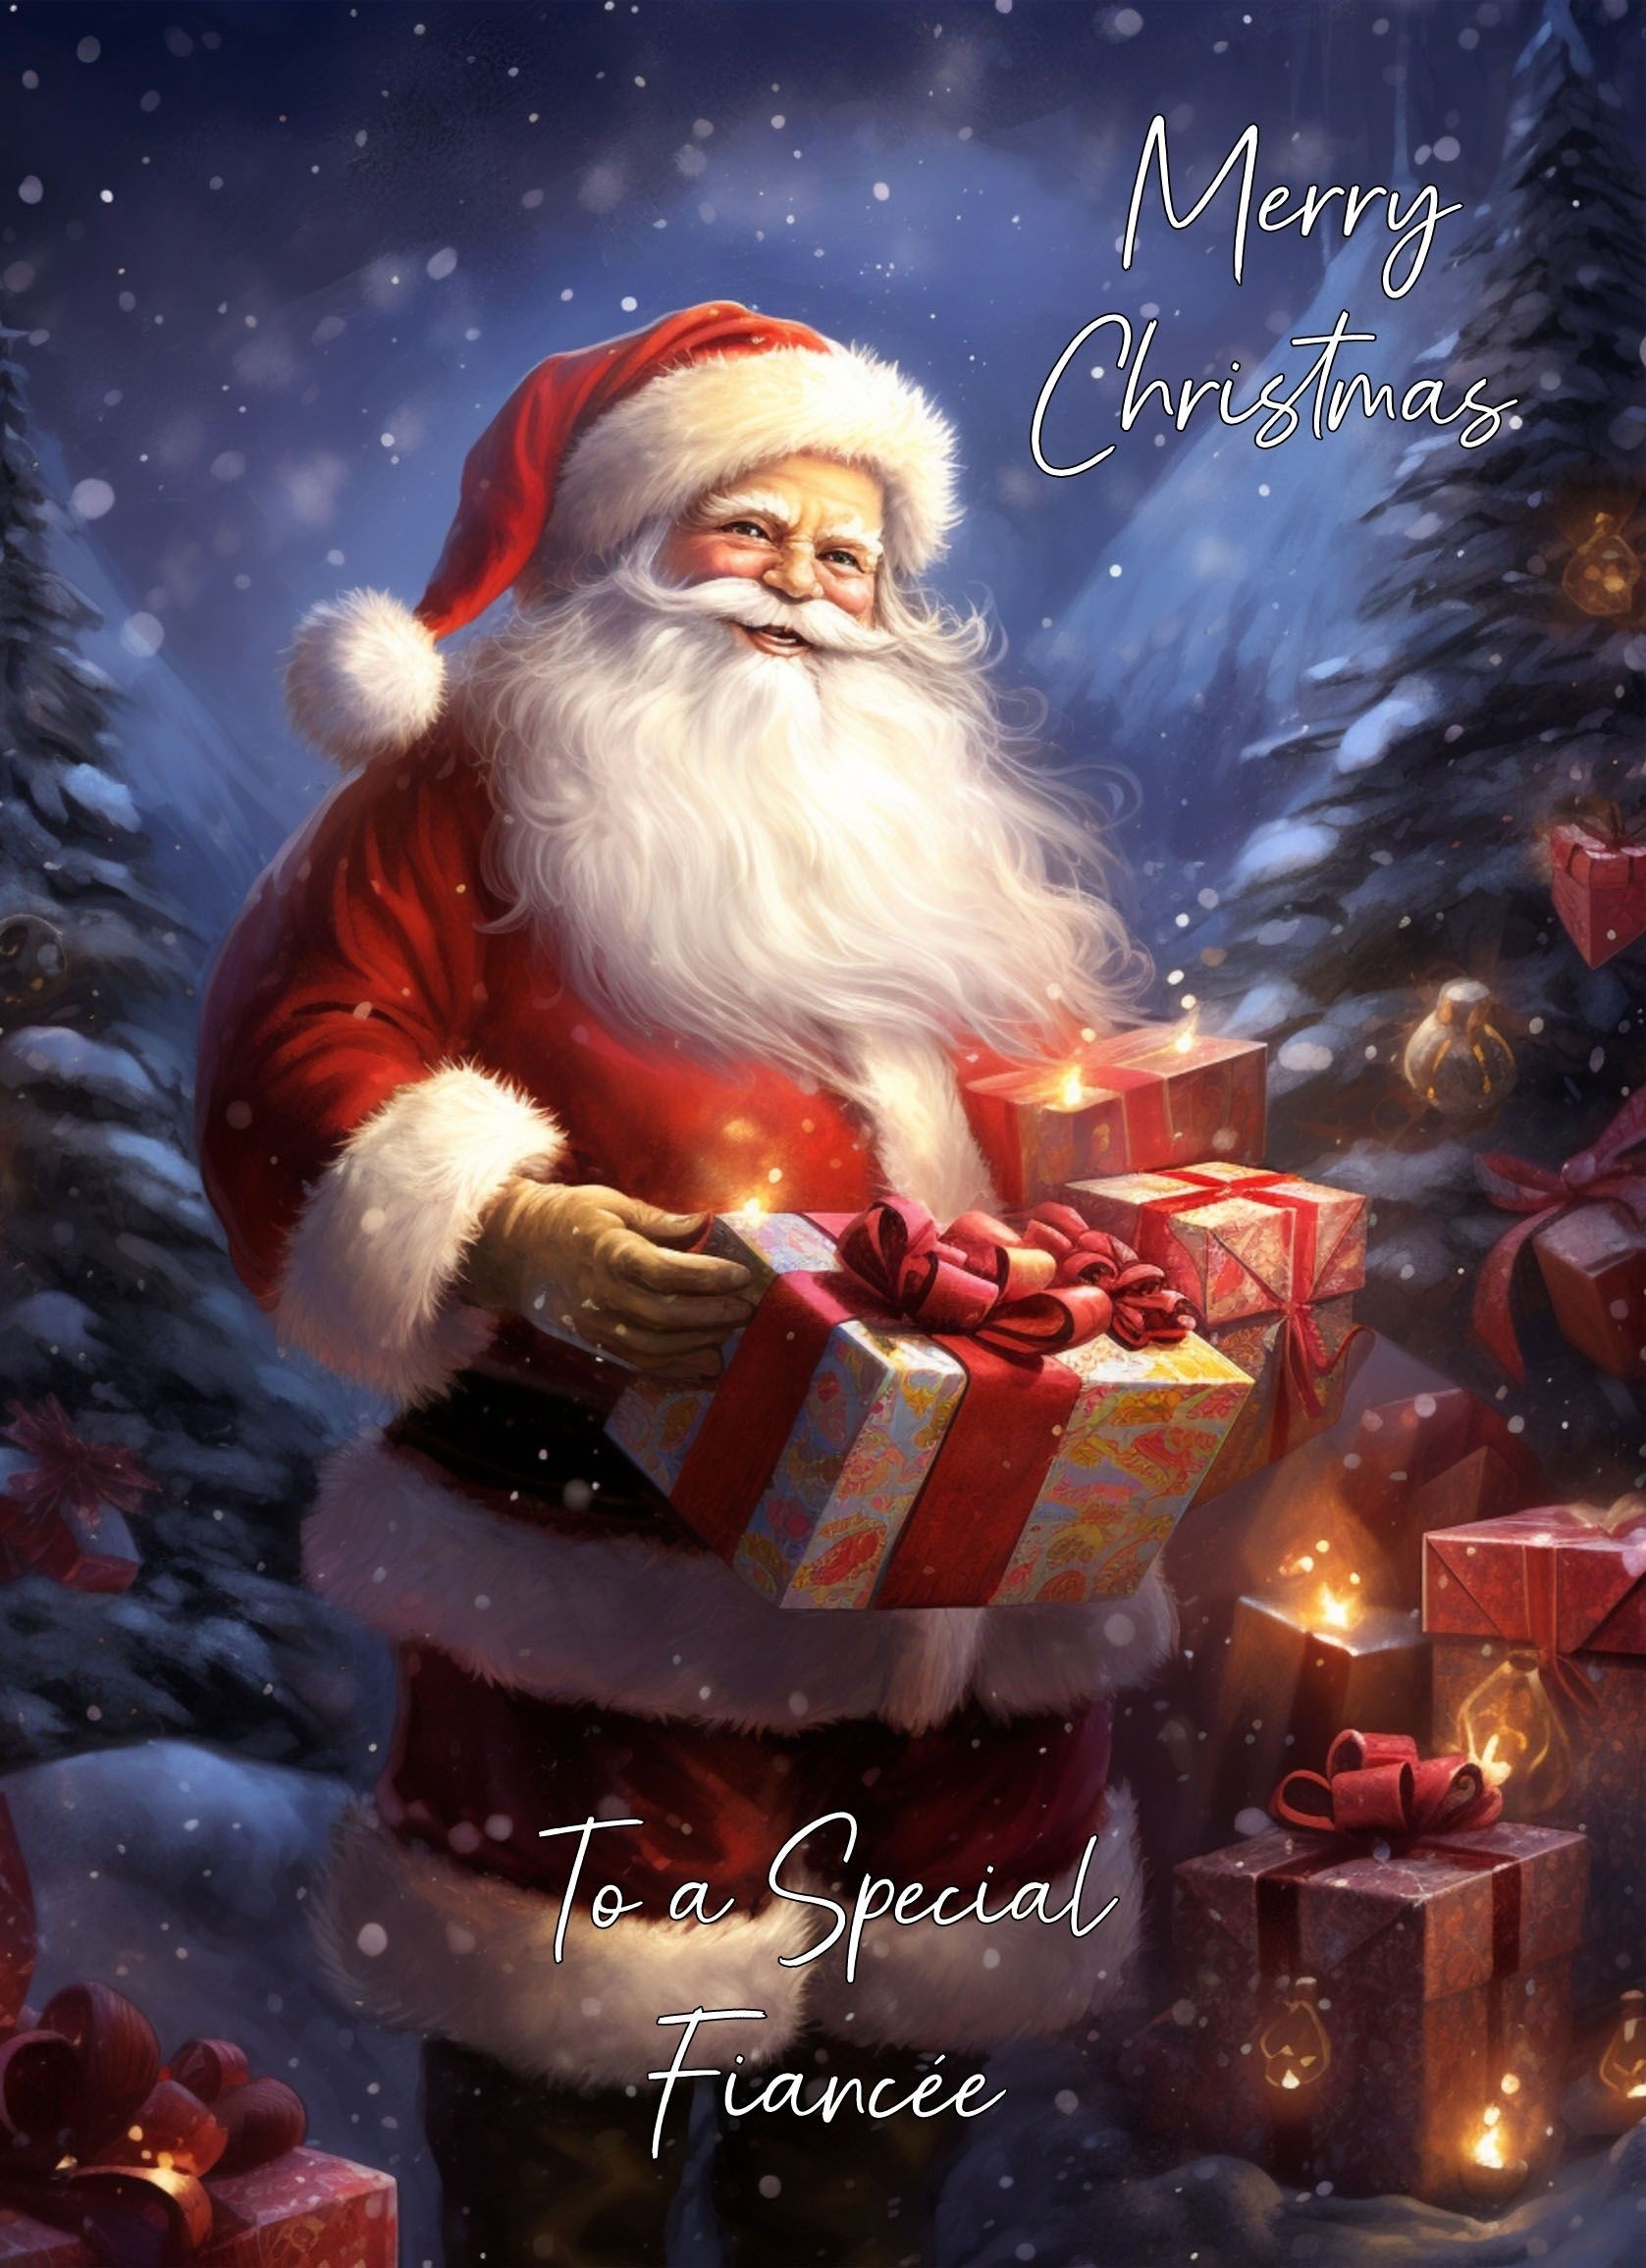 Christmas Card For Fiancee (Santa Claus)